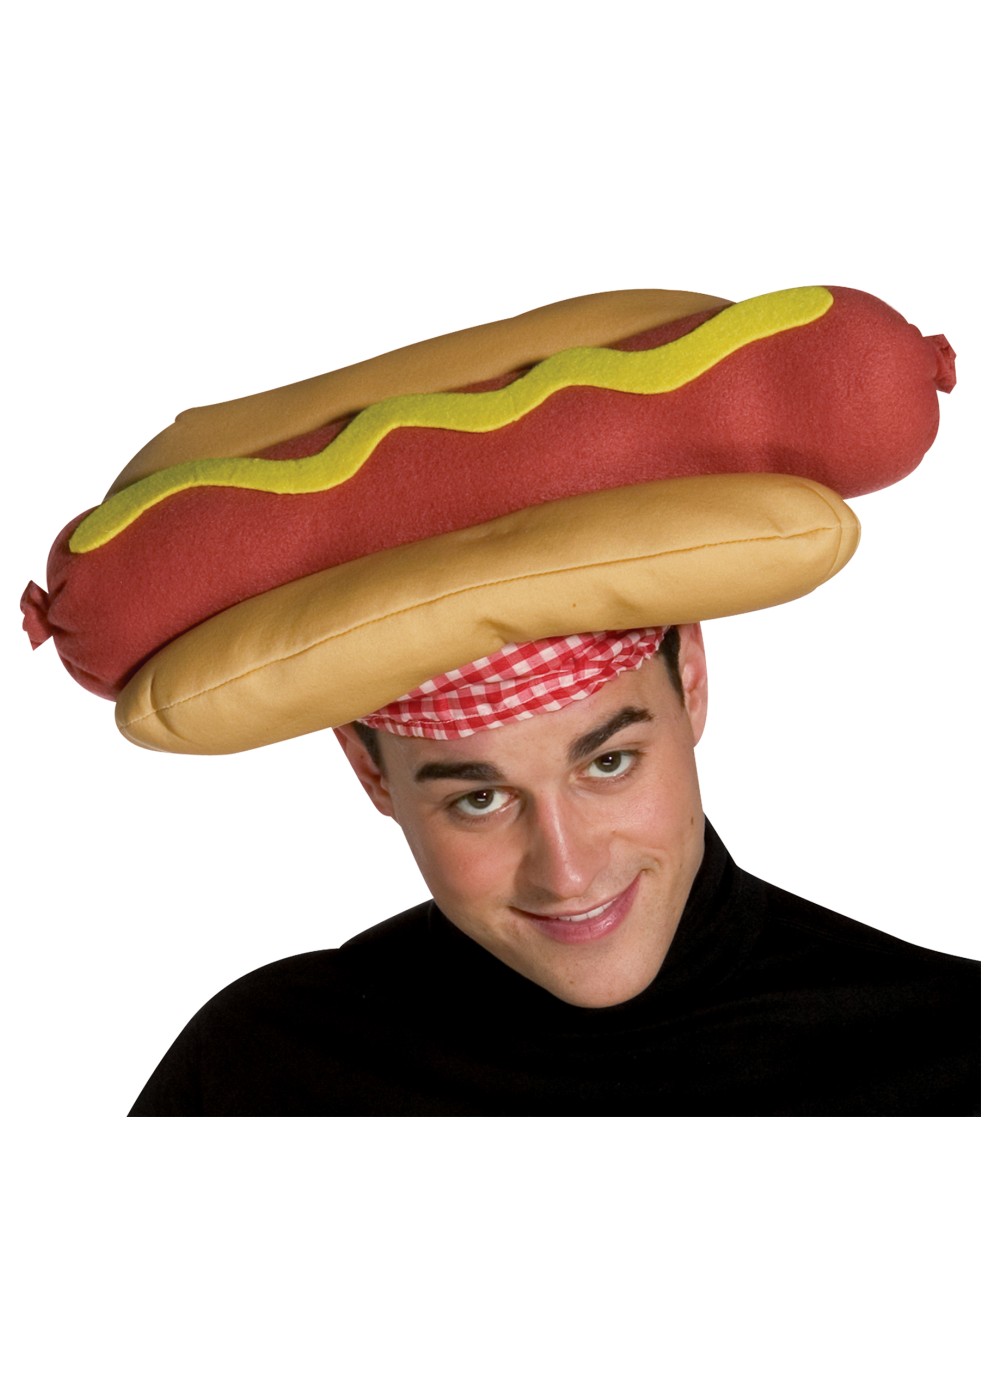 Hot Dog Novelty Hat Plush Cap Vendor Costume Accessory Prop Toy Hotdog Mustard for sale online 